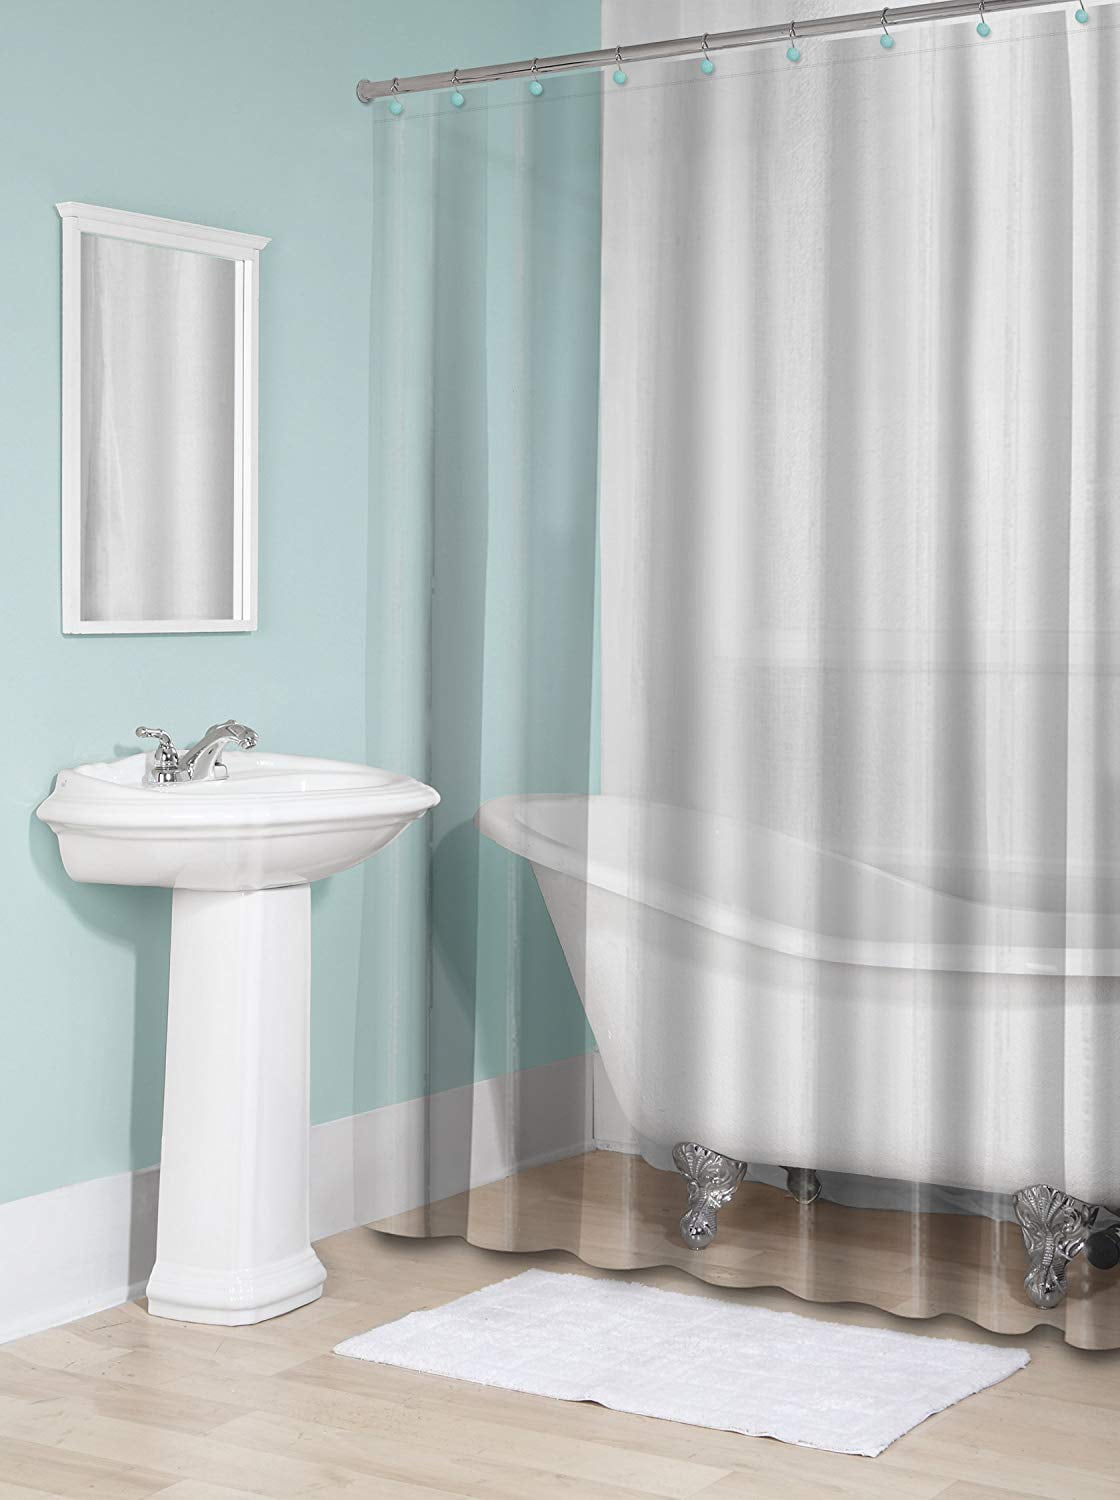 Details about   Lovely Spirit Shower Curtain Bathroom Plastic Waterproof Mildew Splash Resistant 